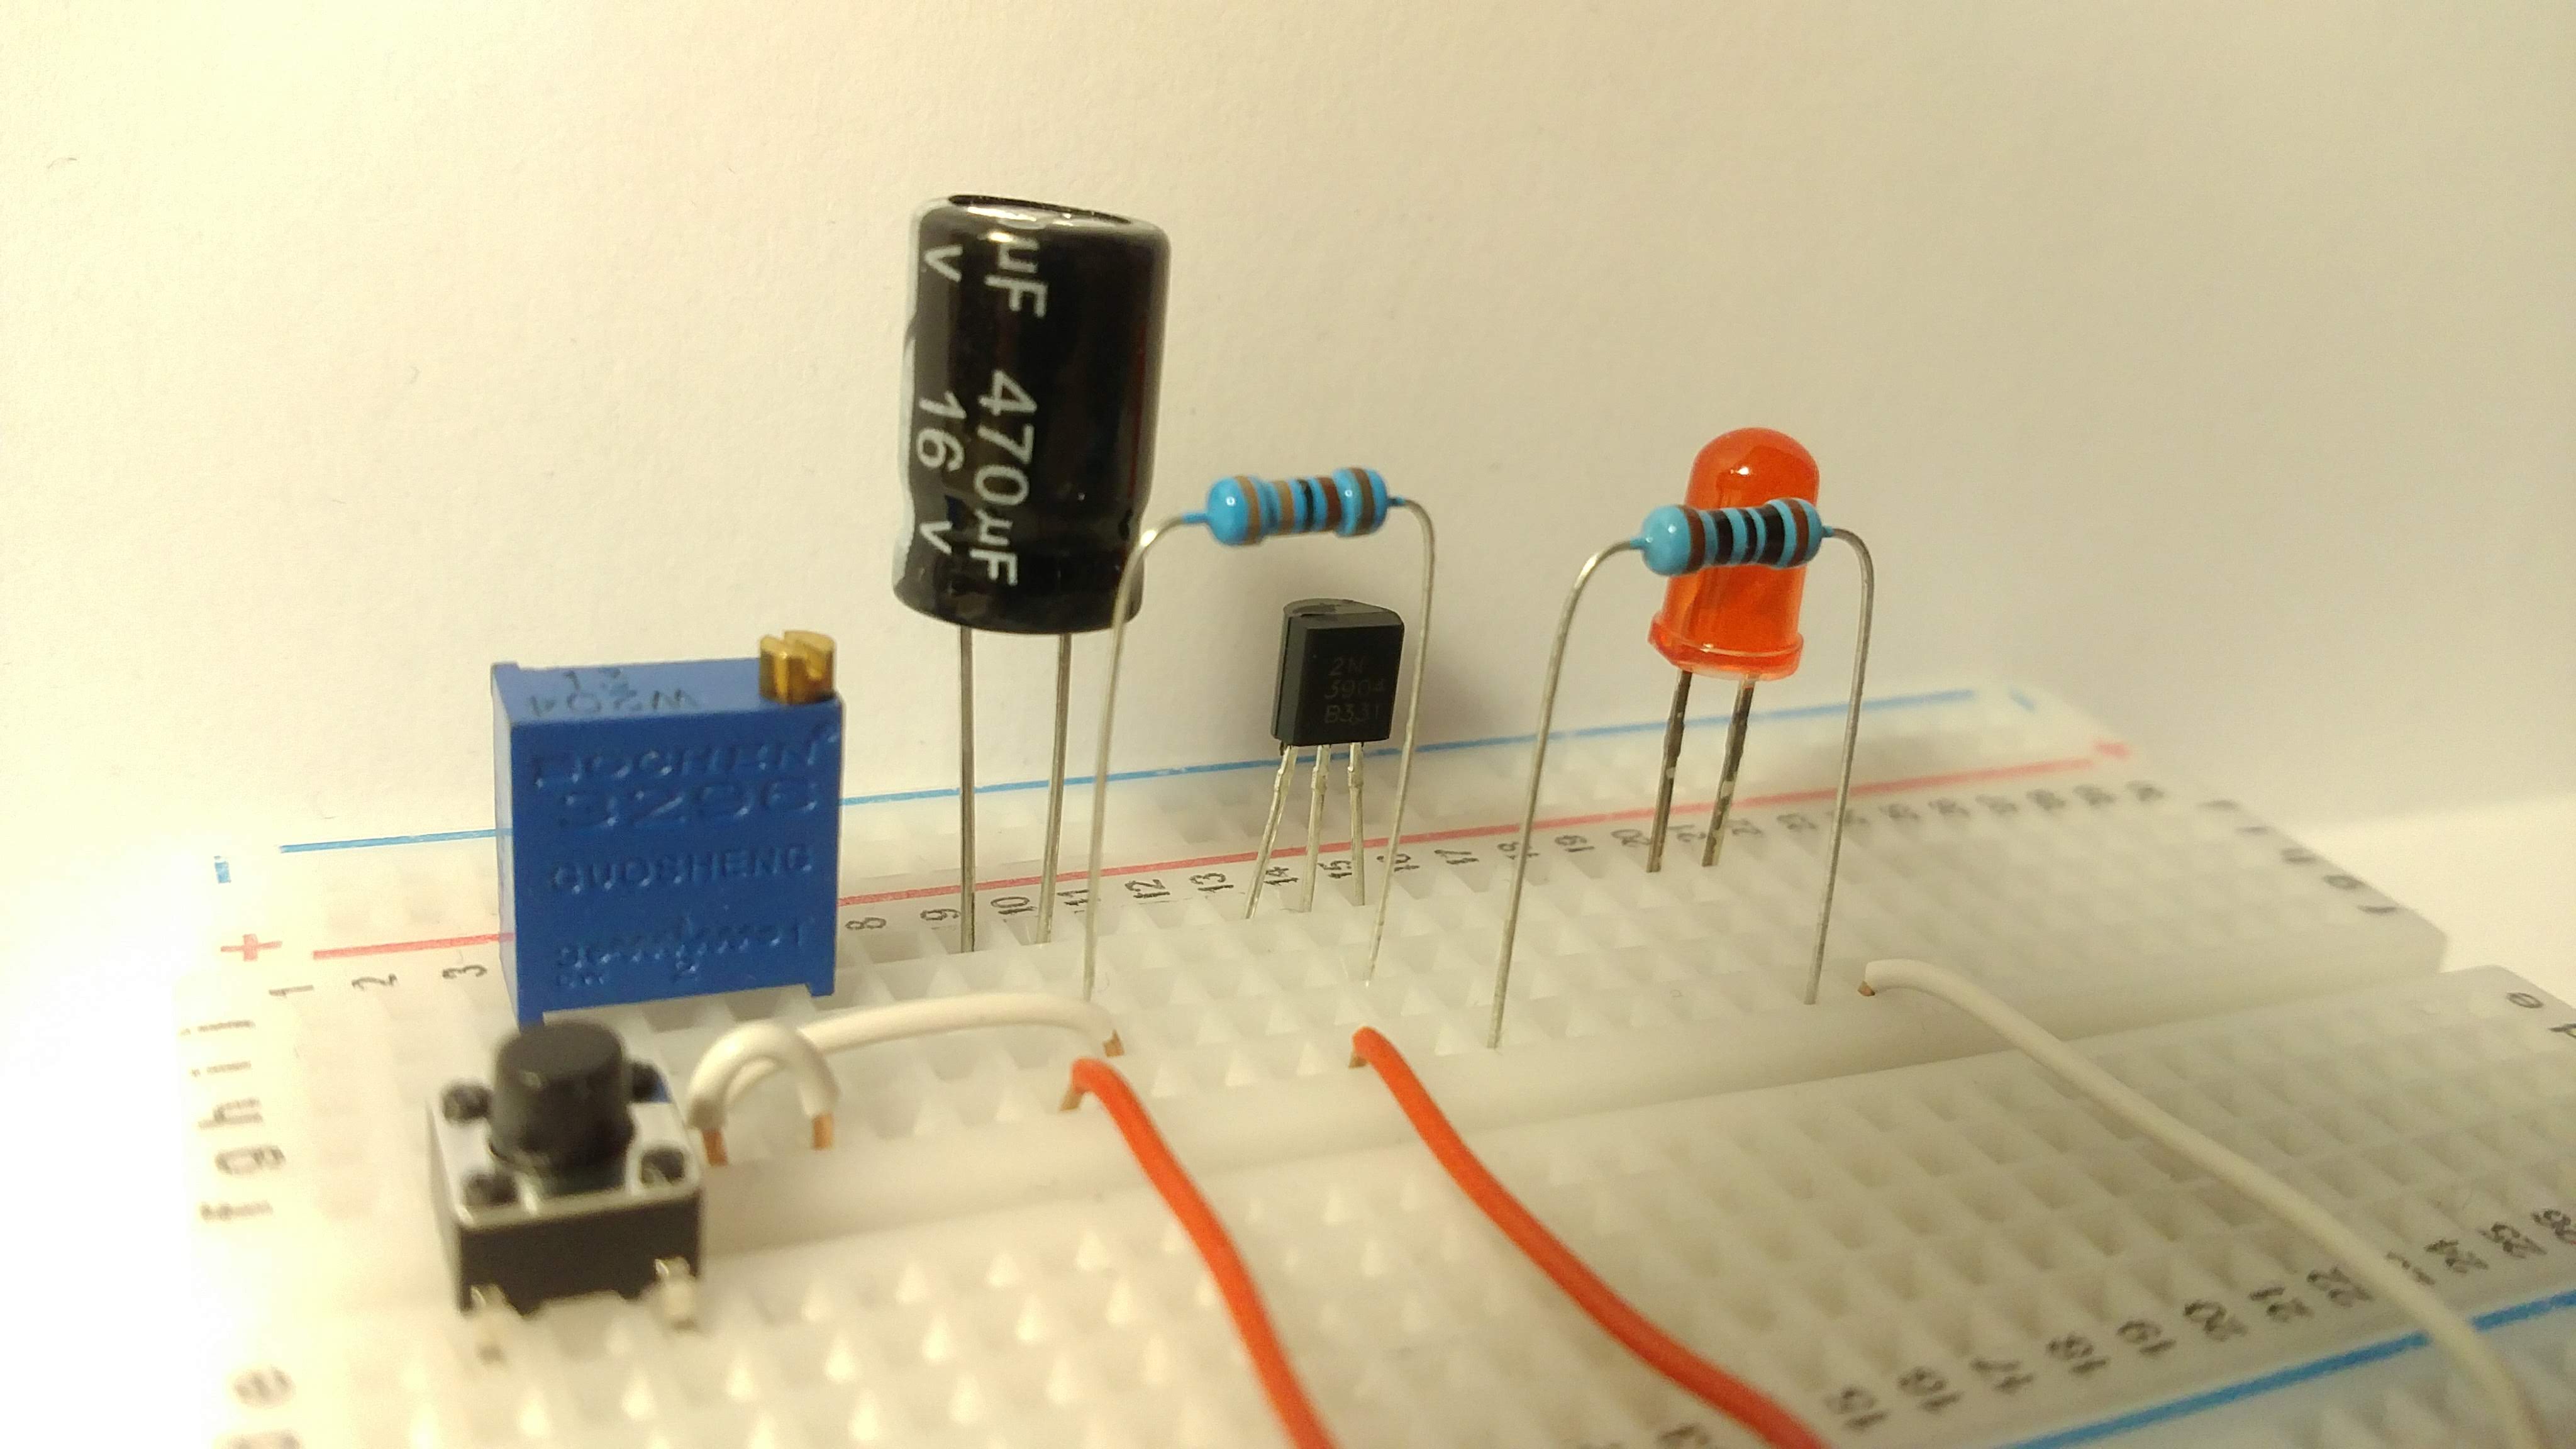 Transistor delay circuit on a breadboard